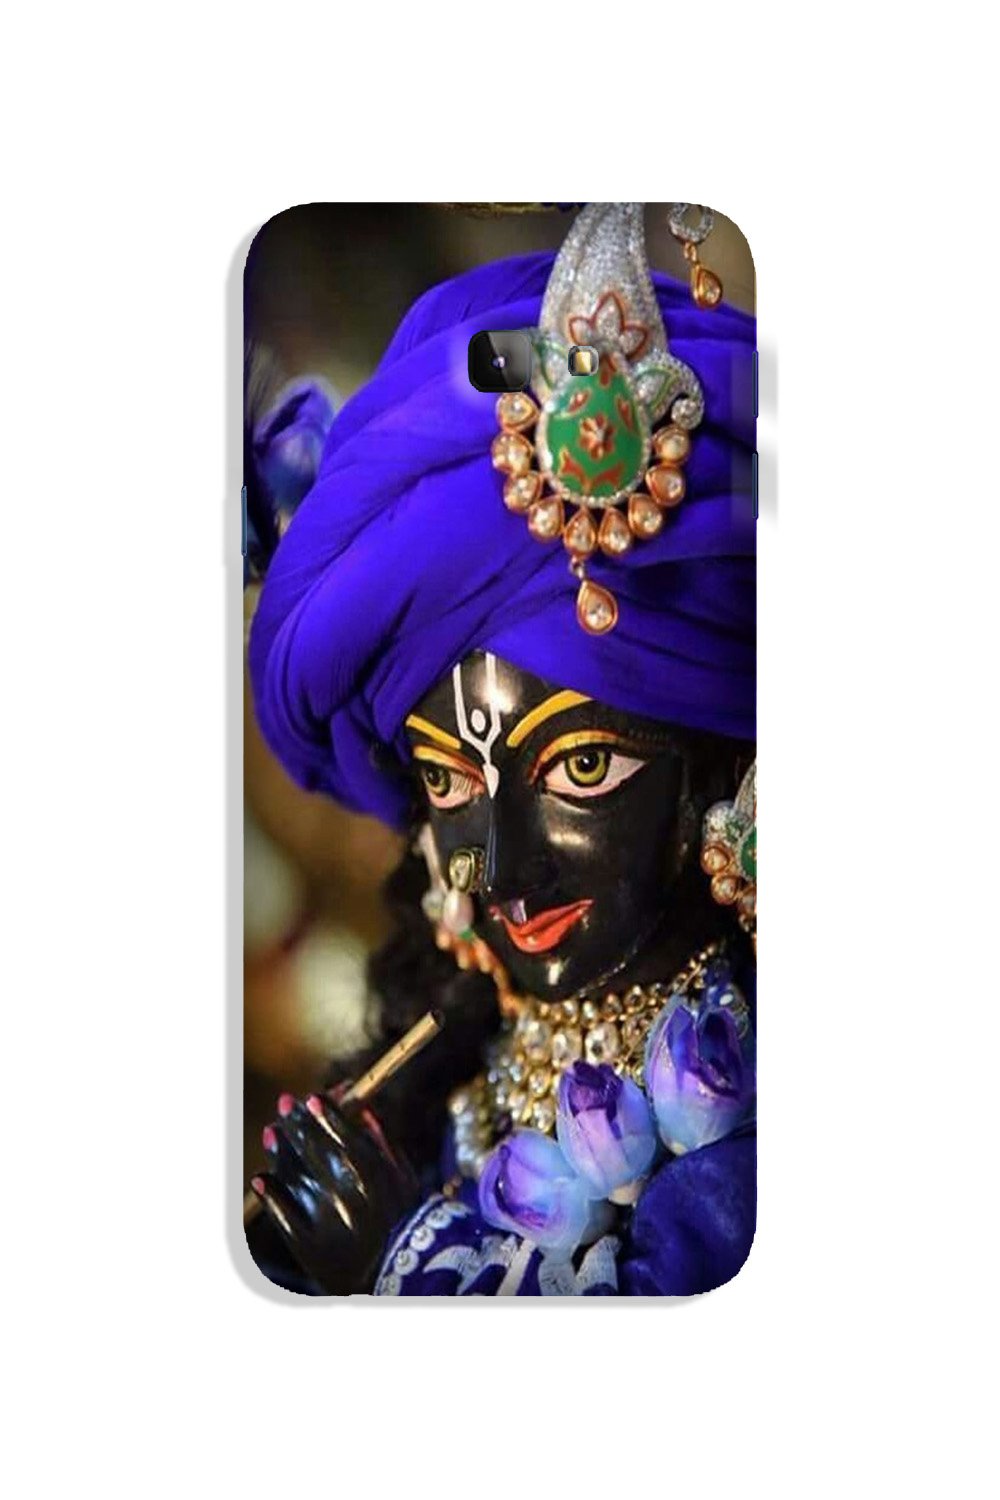 Lord Krishna4 Case for Galaxy J4 Plus